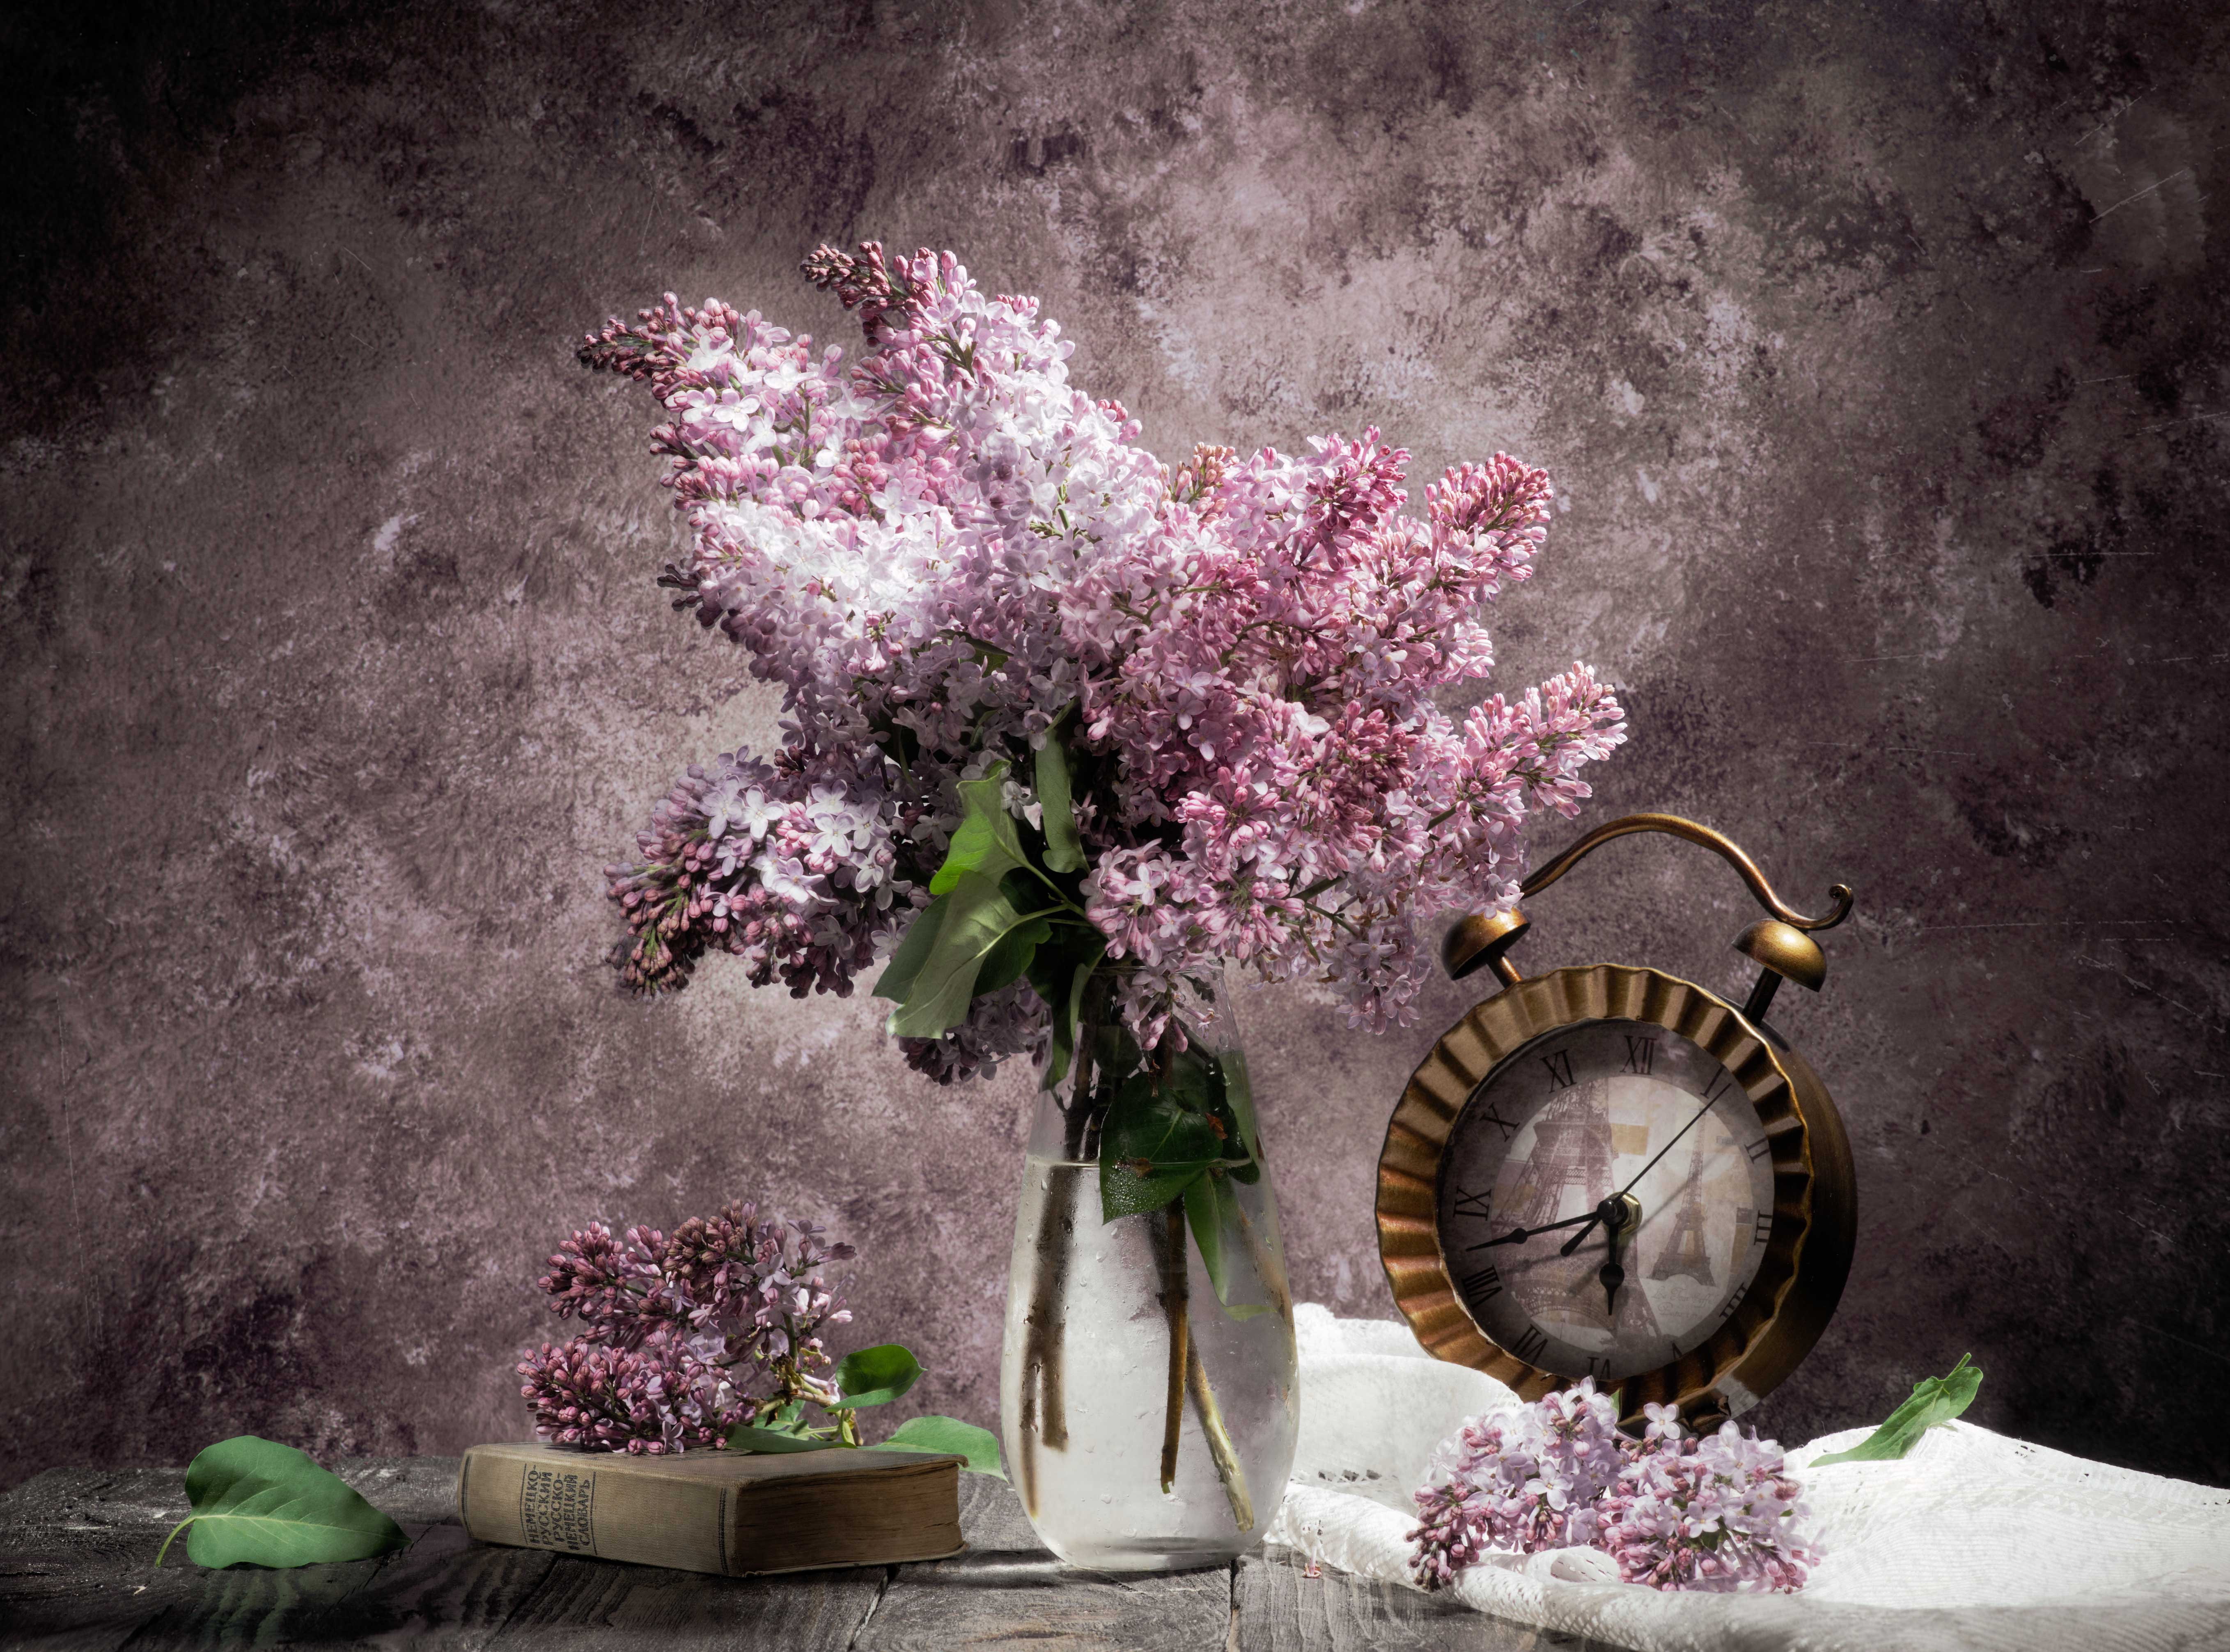 Book Bouquet Clock Lilac 5432x4024